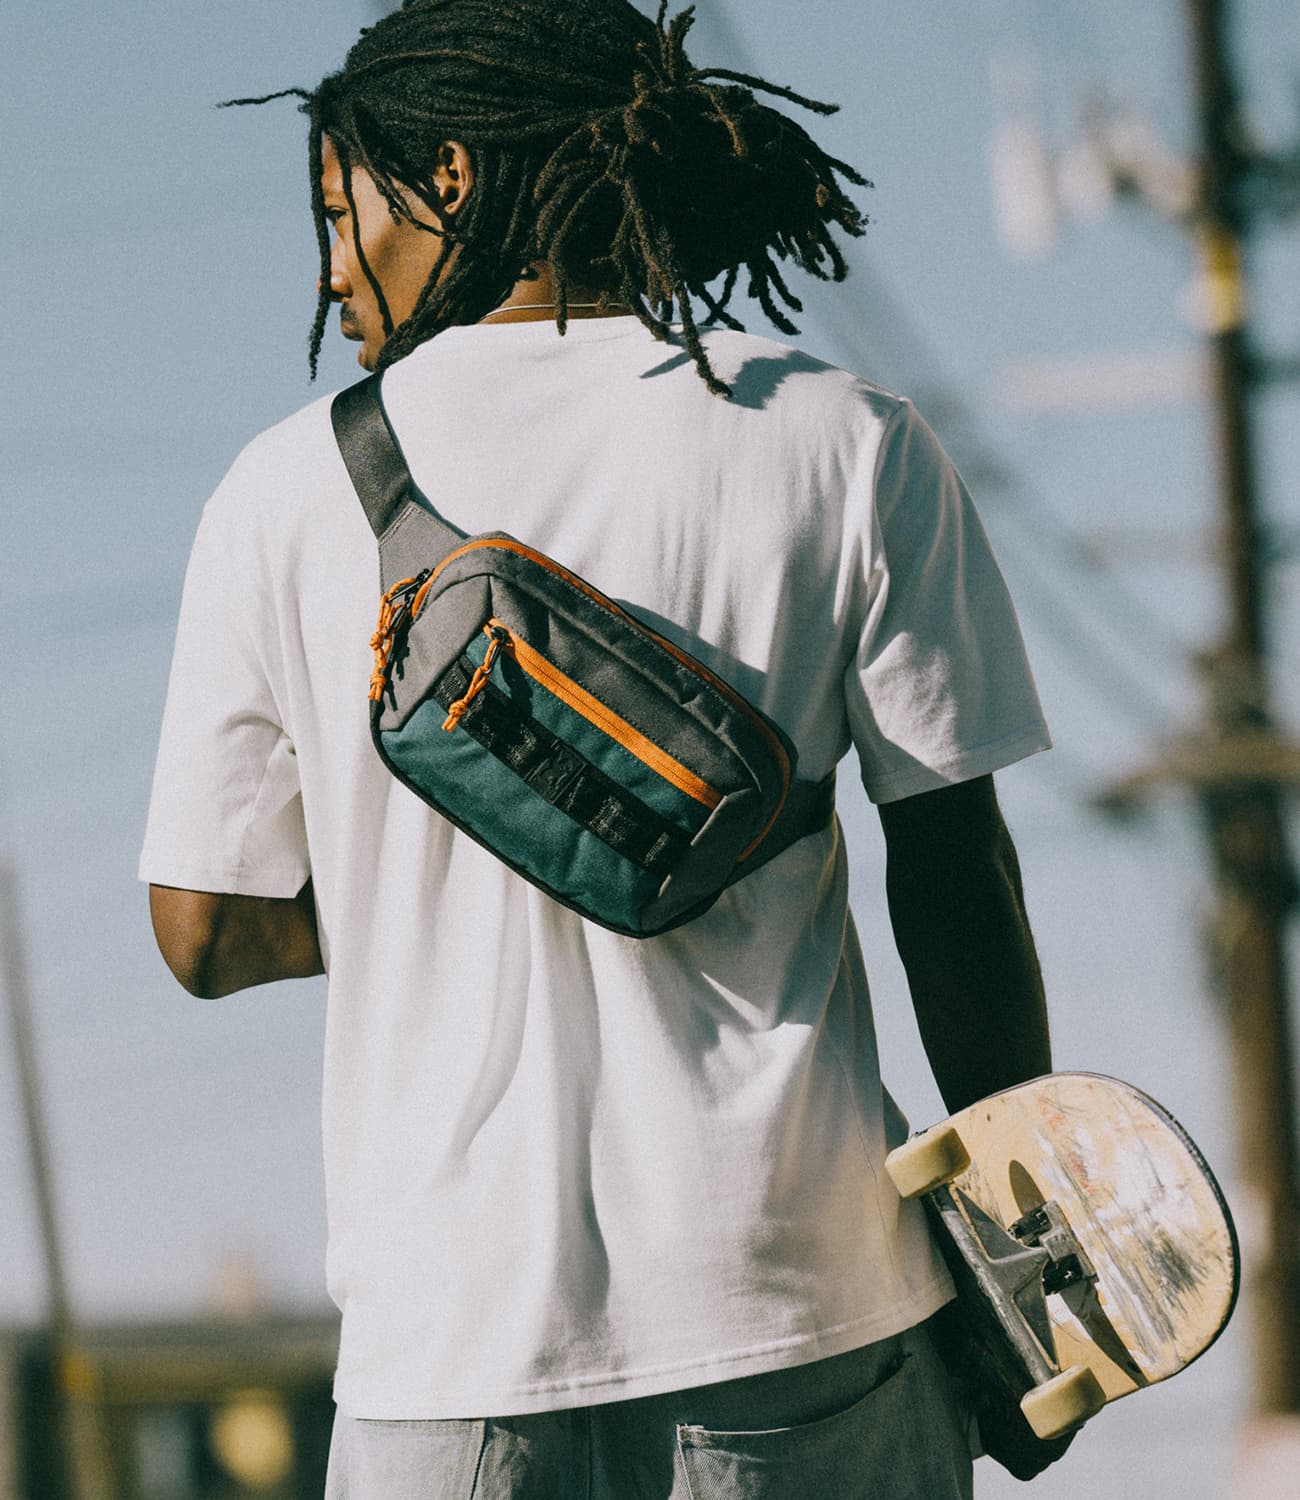 Water-resistant Ziptop Waistpack worn as a sling on a skateboarder